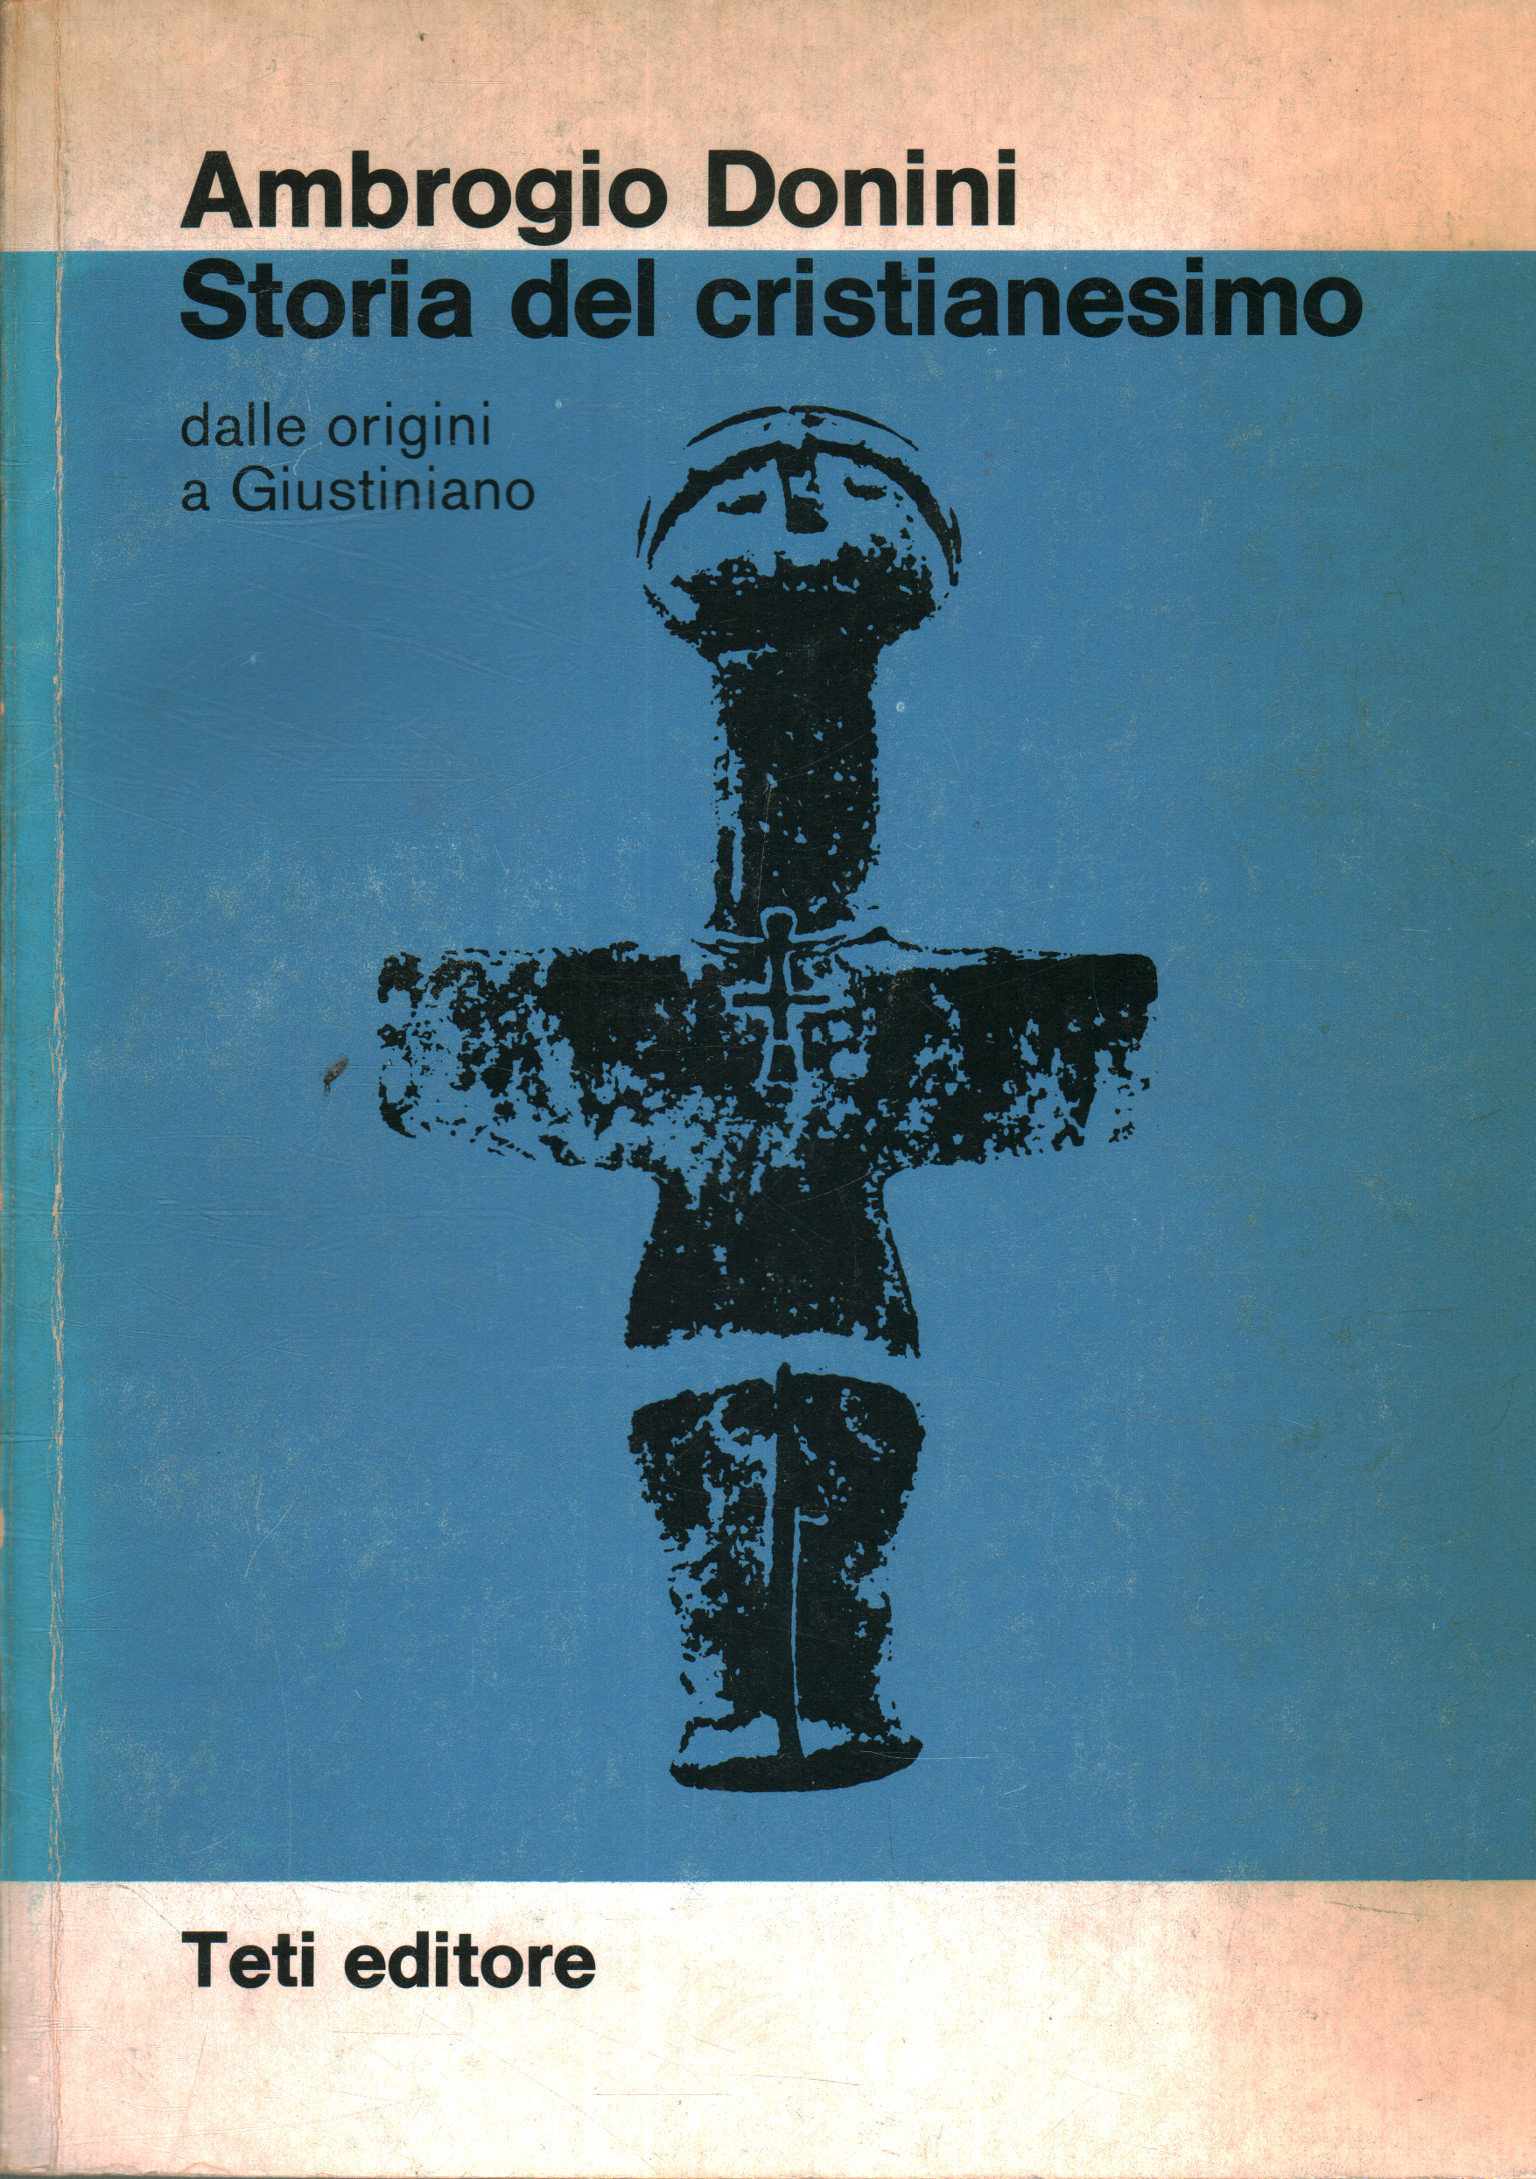 History of Christianity, Ambrogio Donini